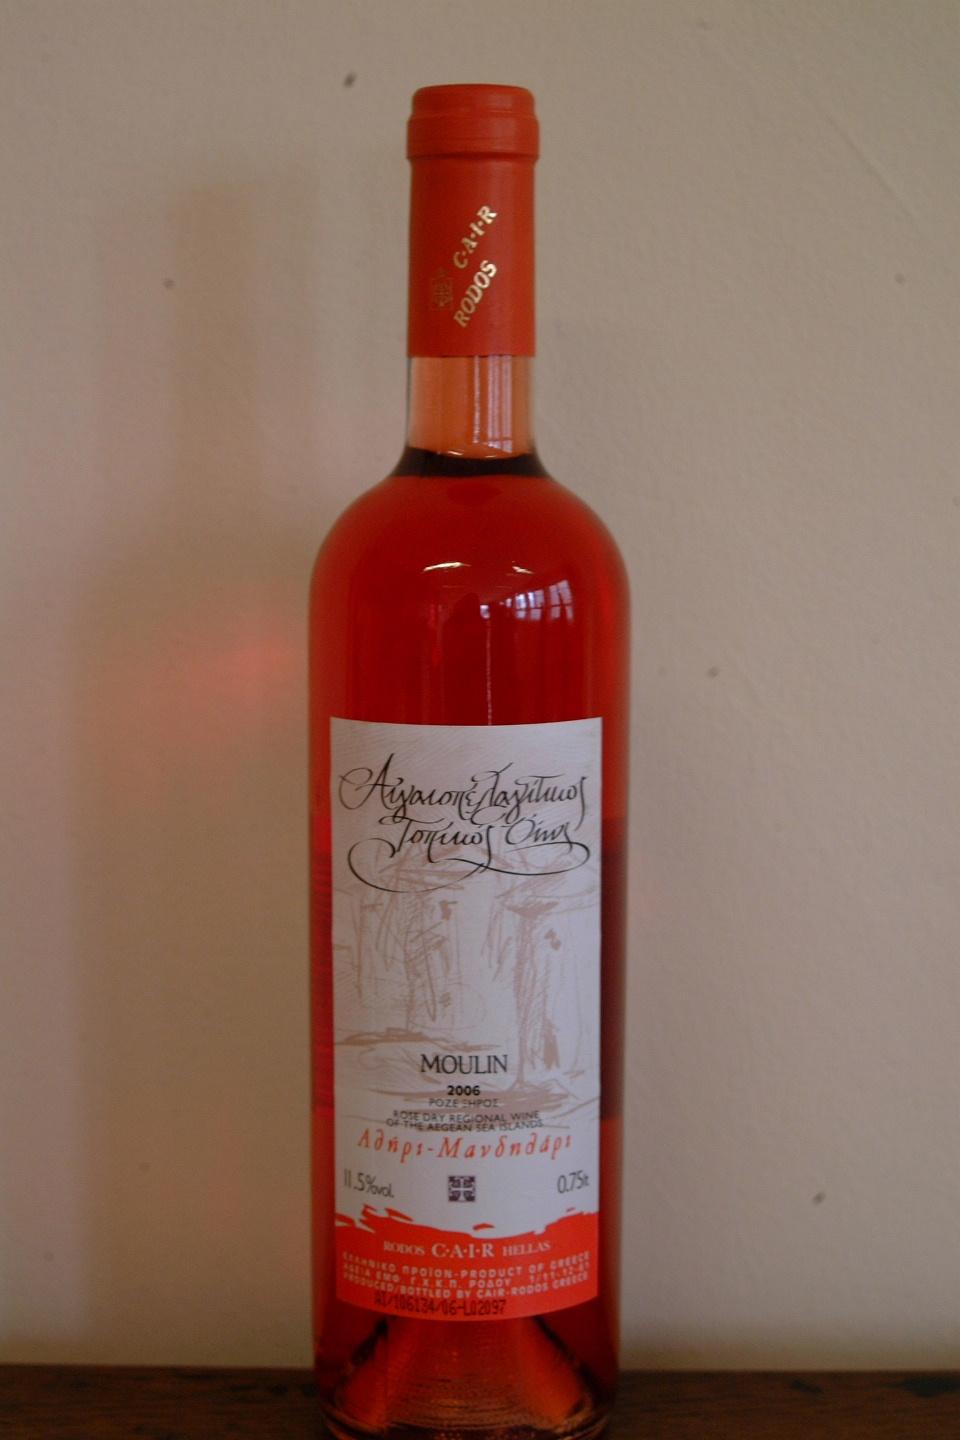 GriekseProducten Cair Rosé droog Alcohol: 11.